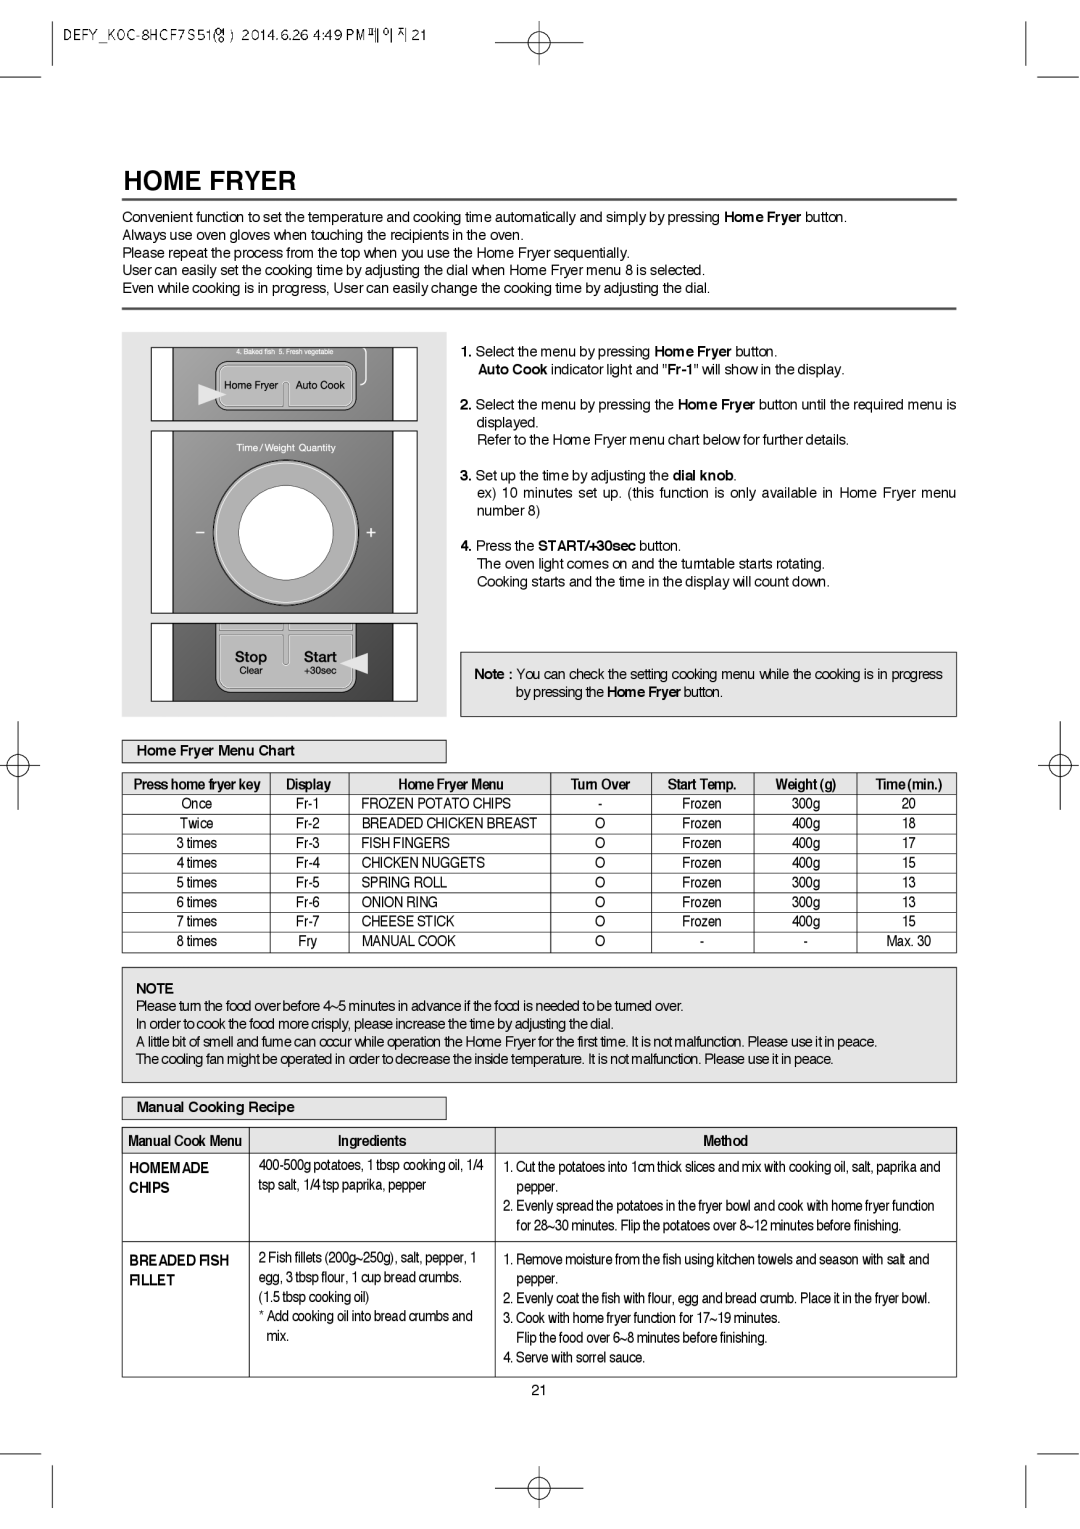 Defy Appliances MWA 2434 MM user manual Home Fryer 